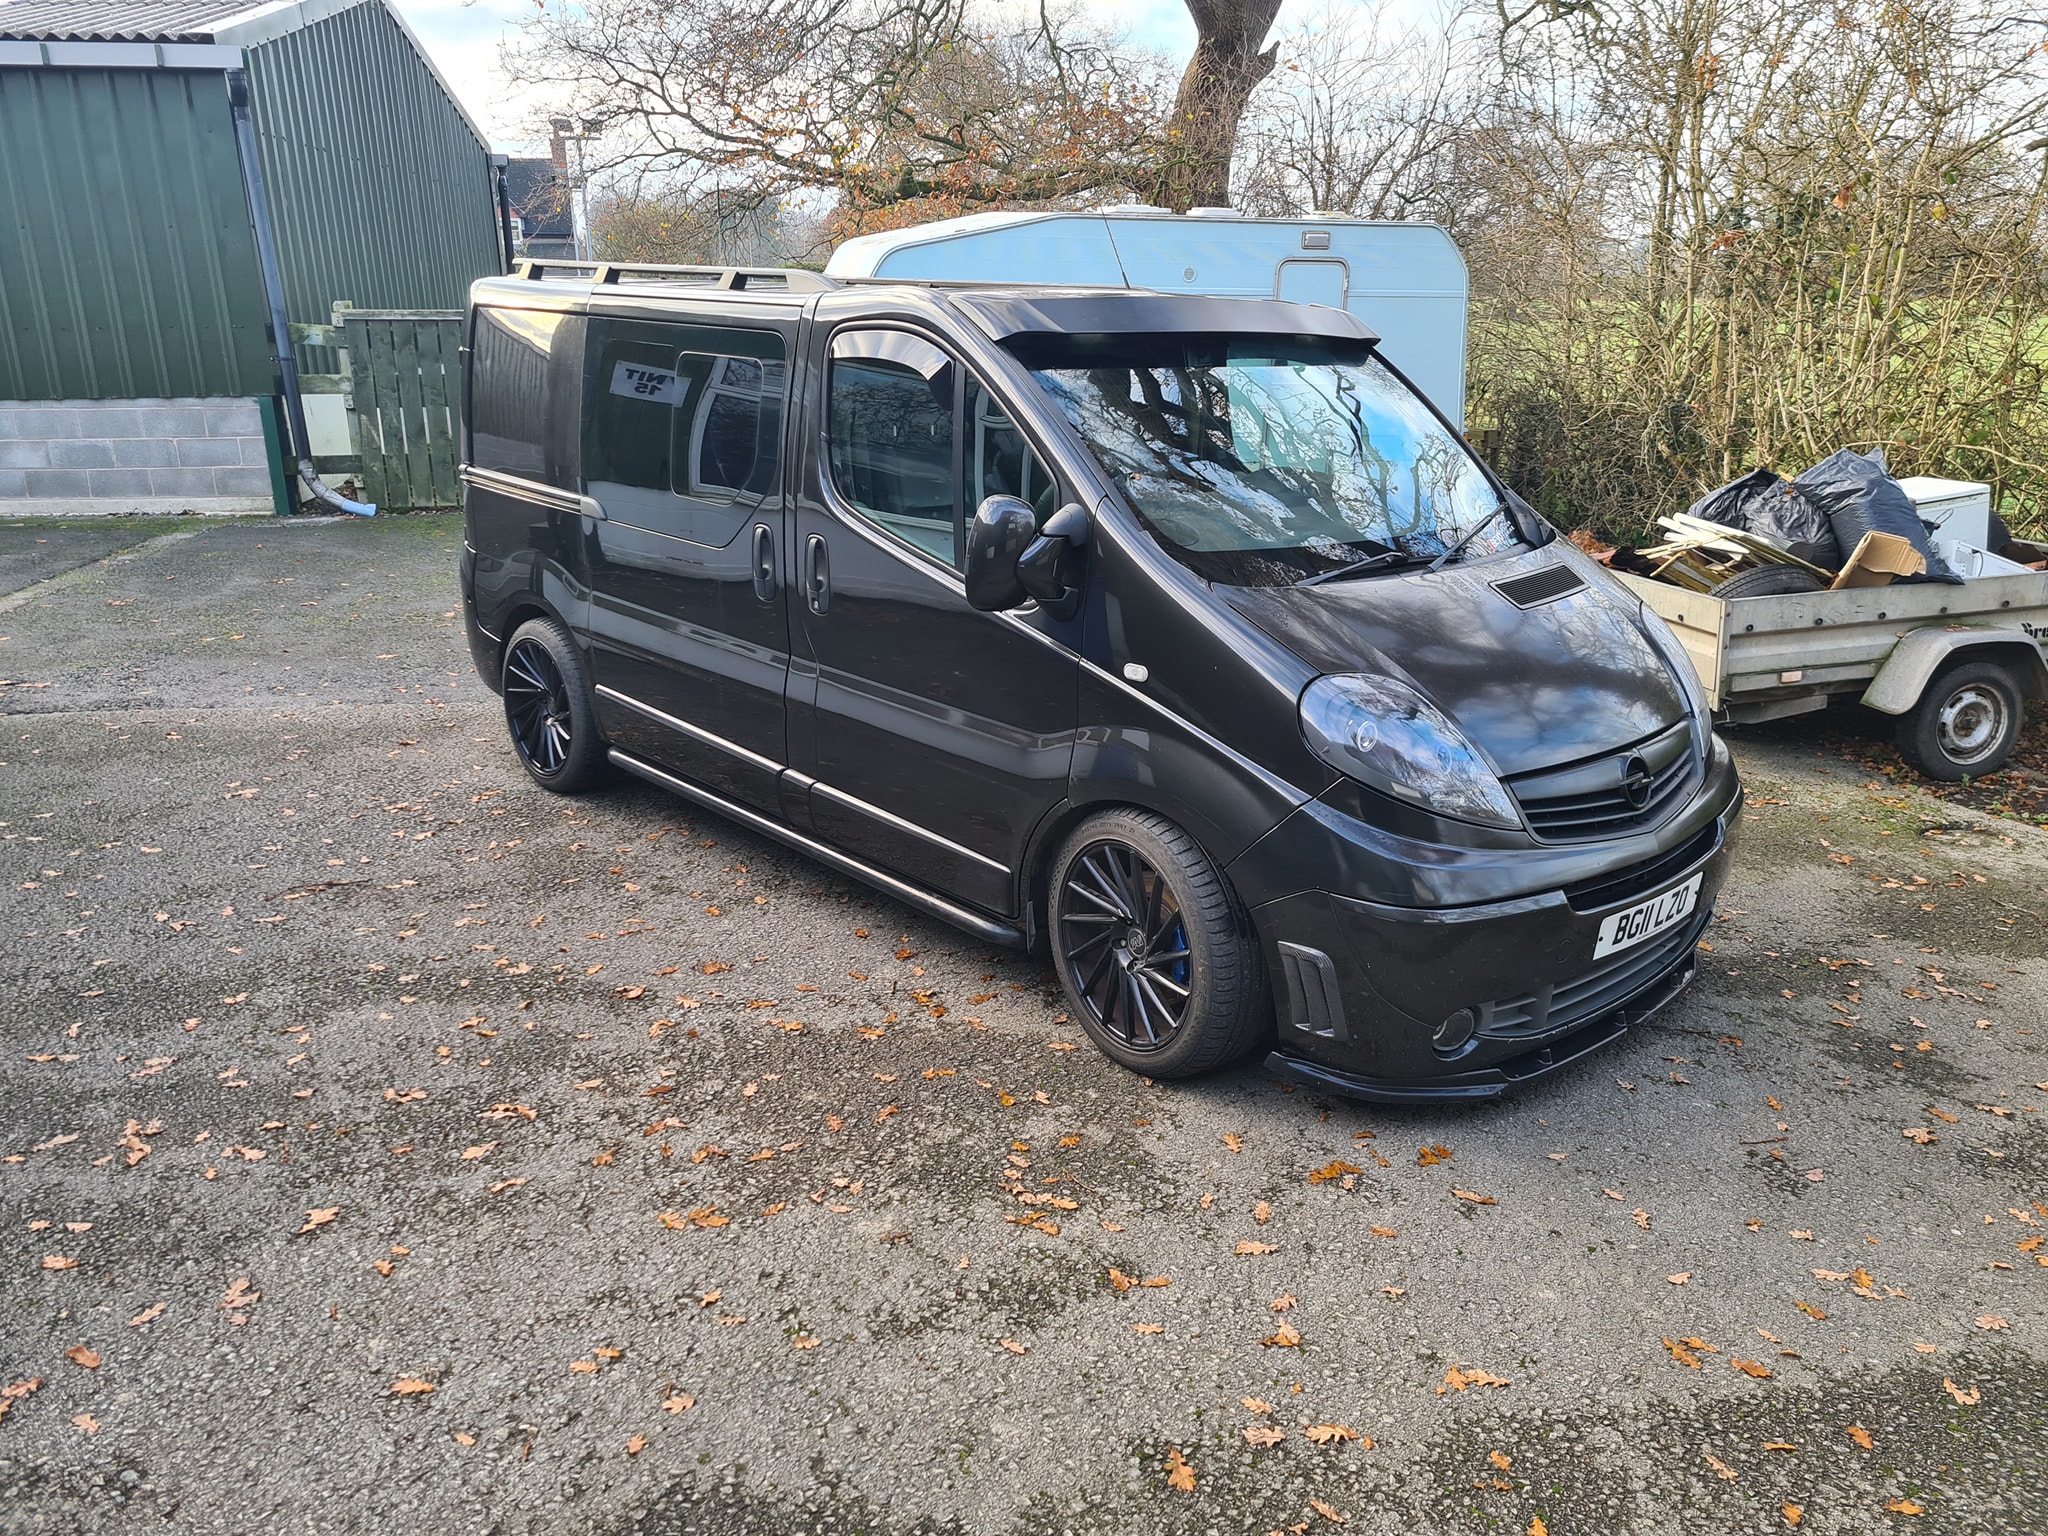 modified vans for sale uk